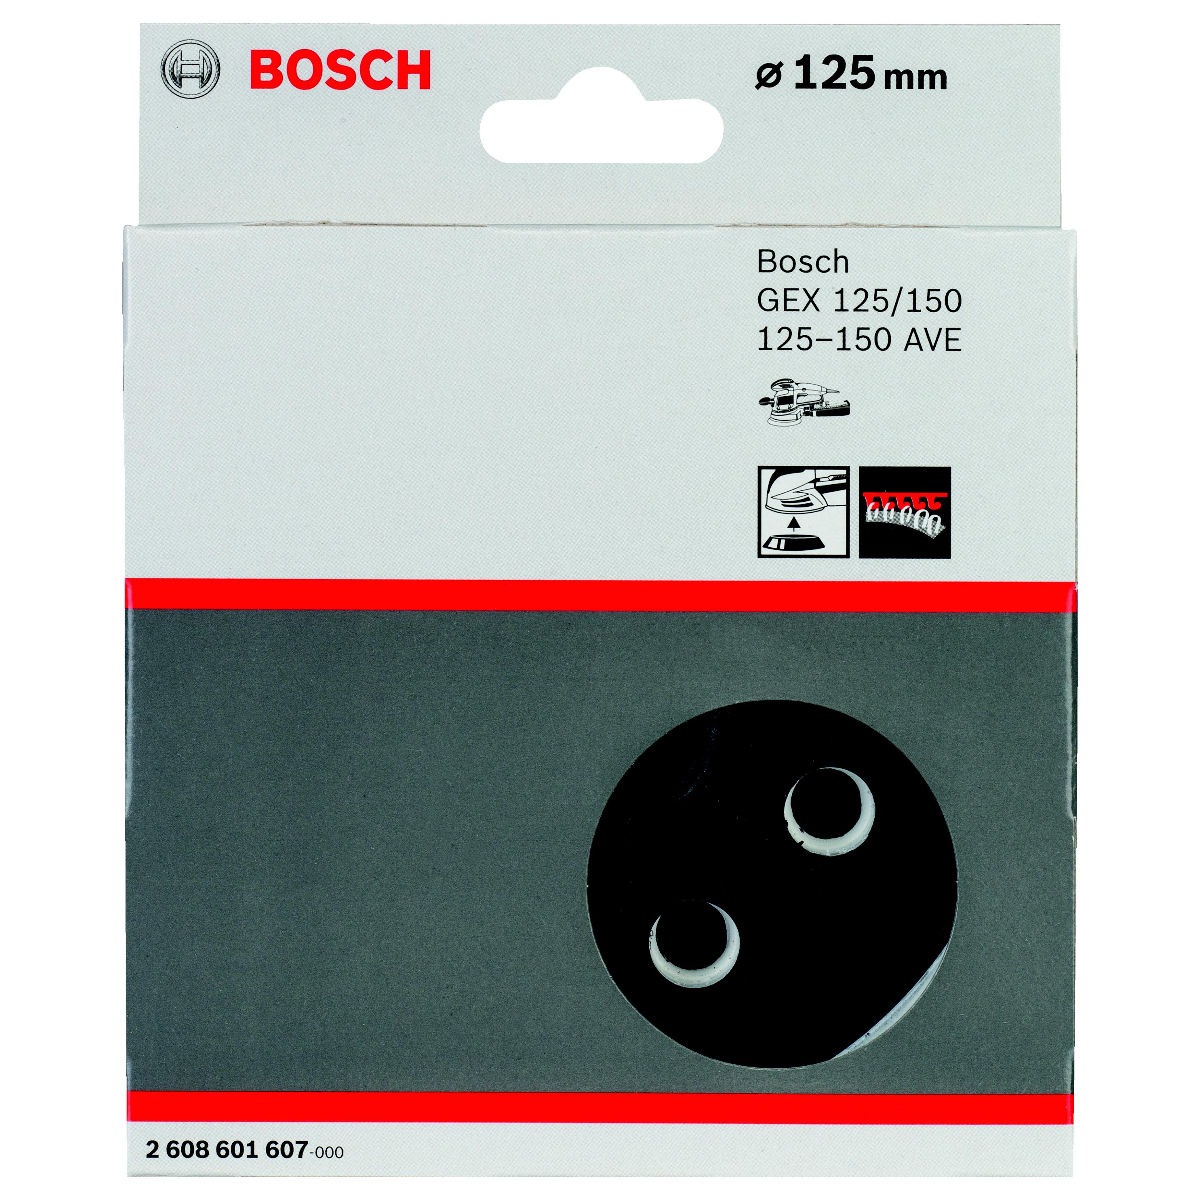 Bosch Gex 125 150 Ave Купить